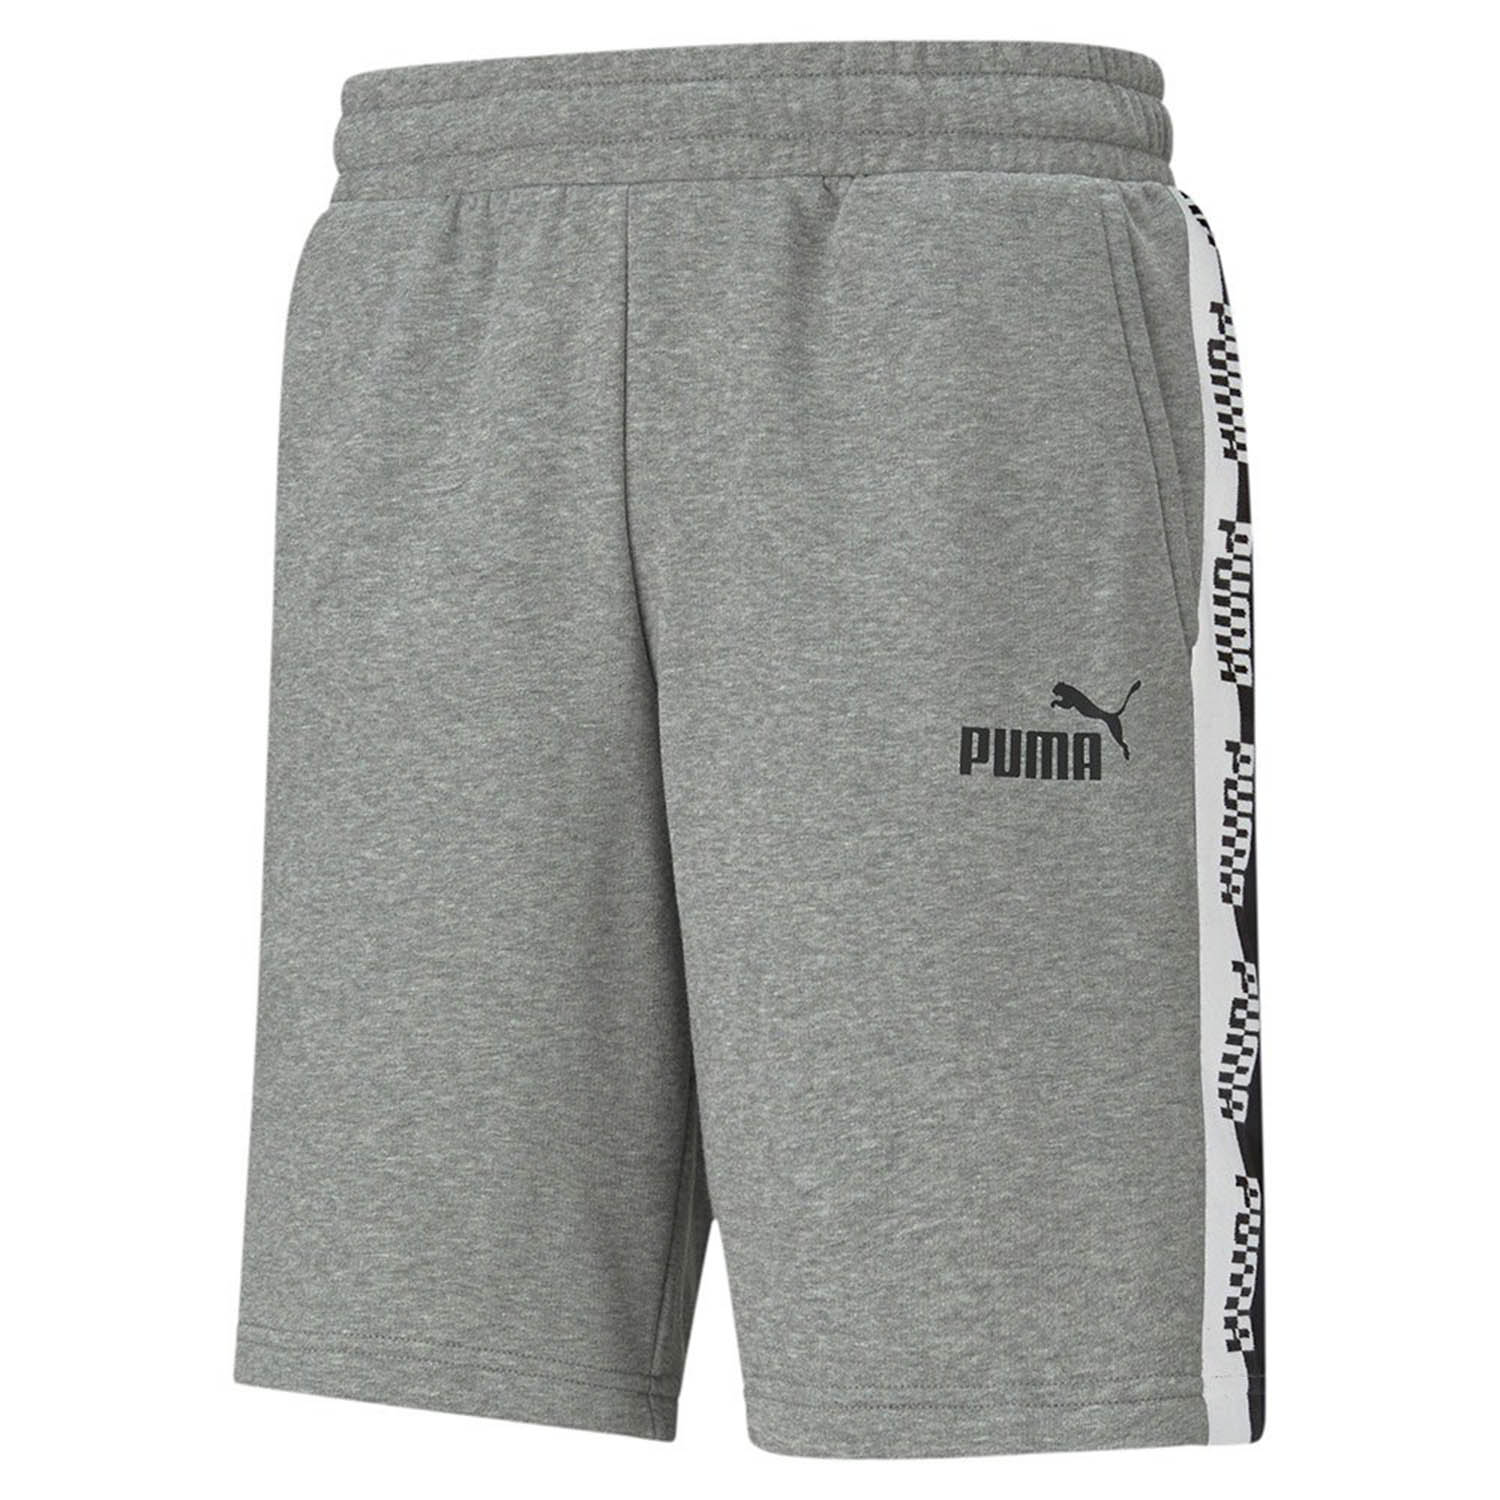 PUMA Amplified Shorts 9 TR Sporthose Trainingshose Übergröße 585786 03 Grau von Puma